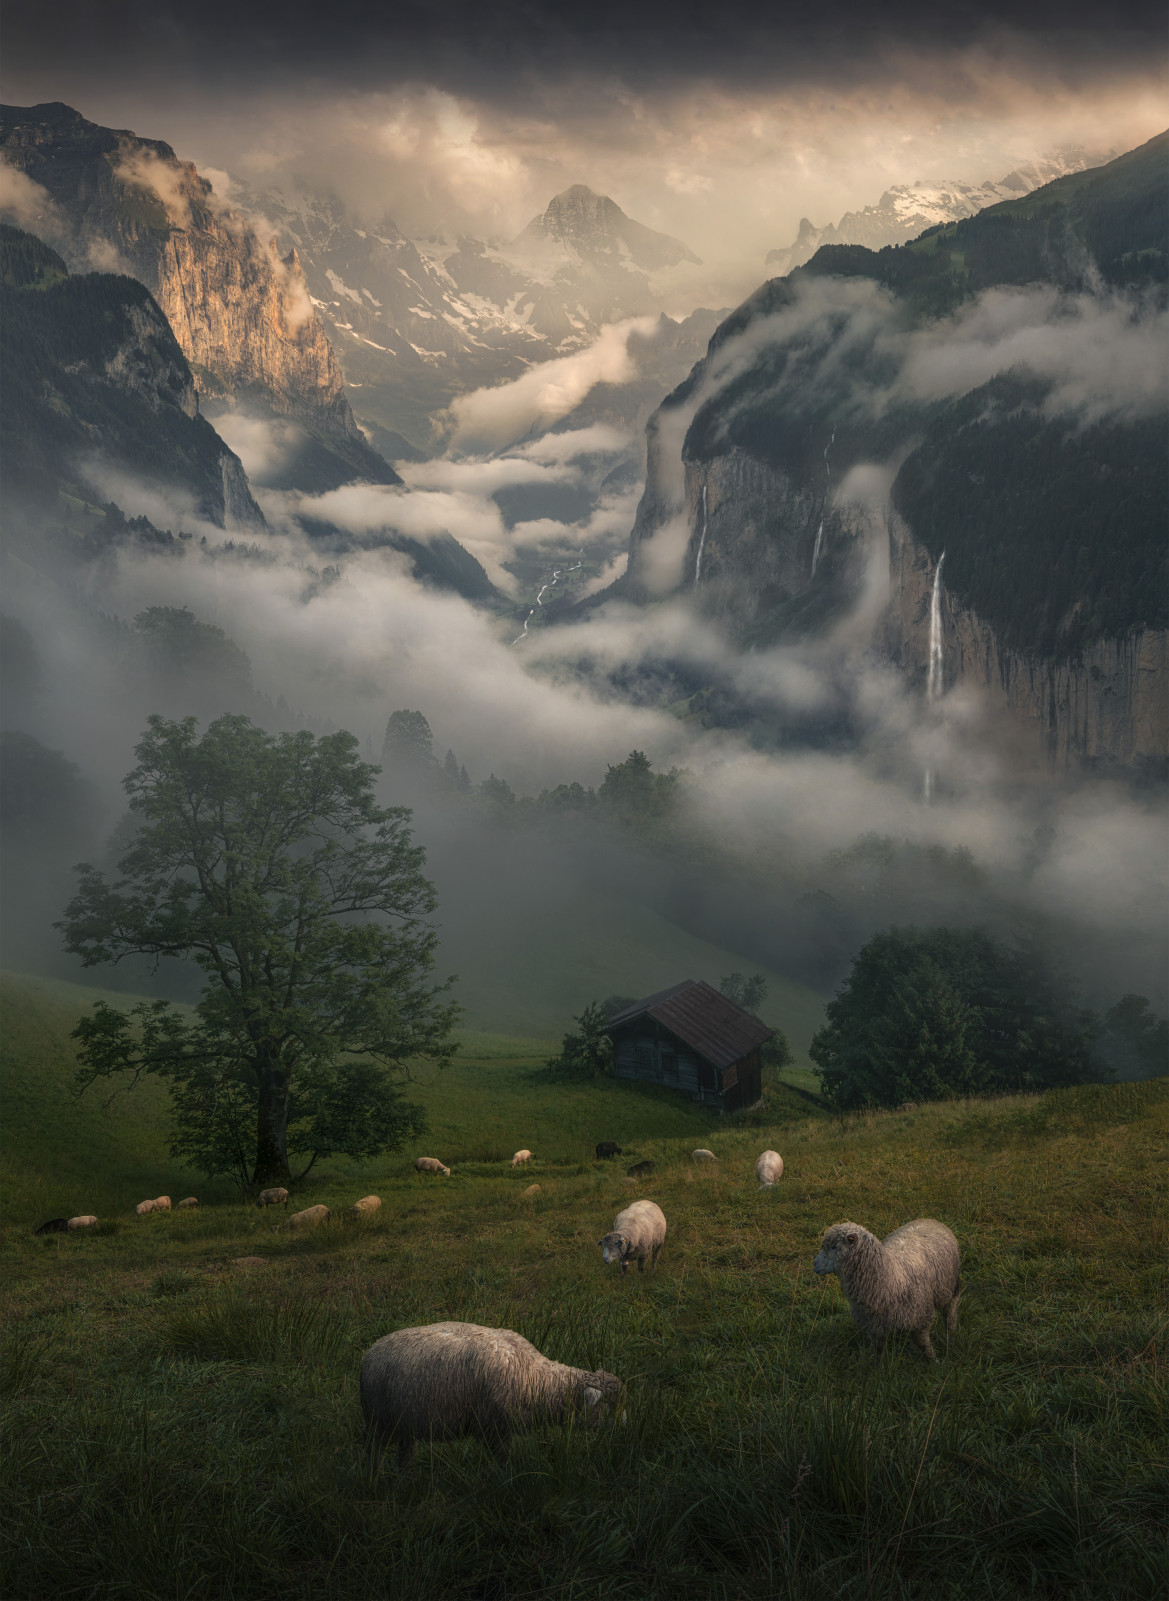 fot. Max Rive "Inhabitants of Alps", 2. miejsce w kat. Portfolio / 2021 International Landscape Photographer of the Year